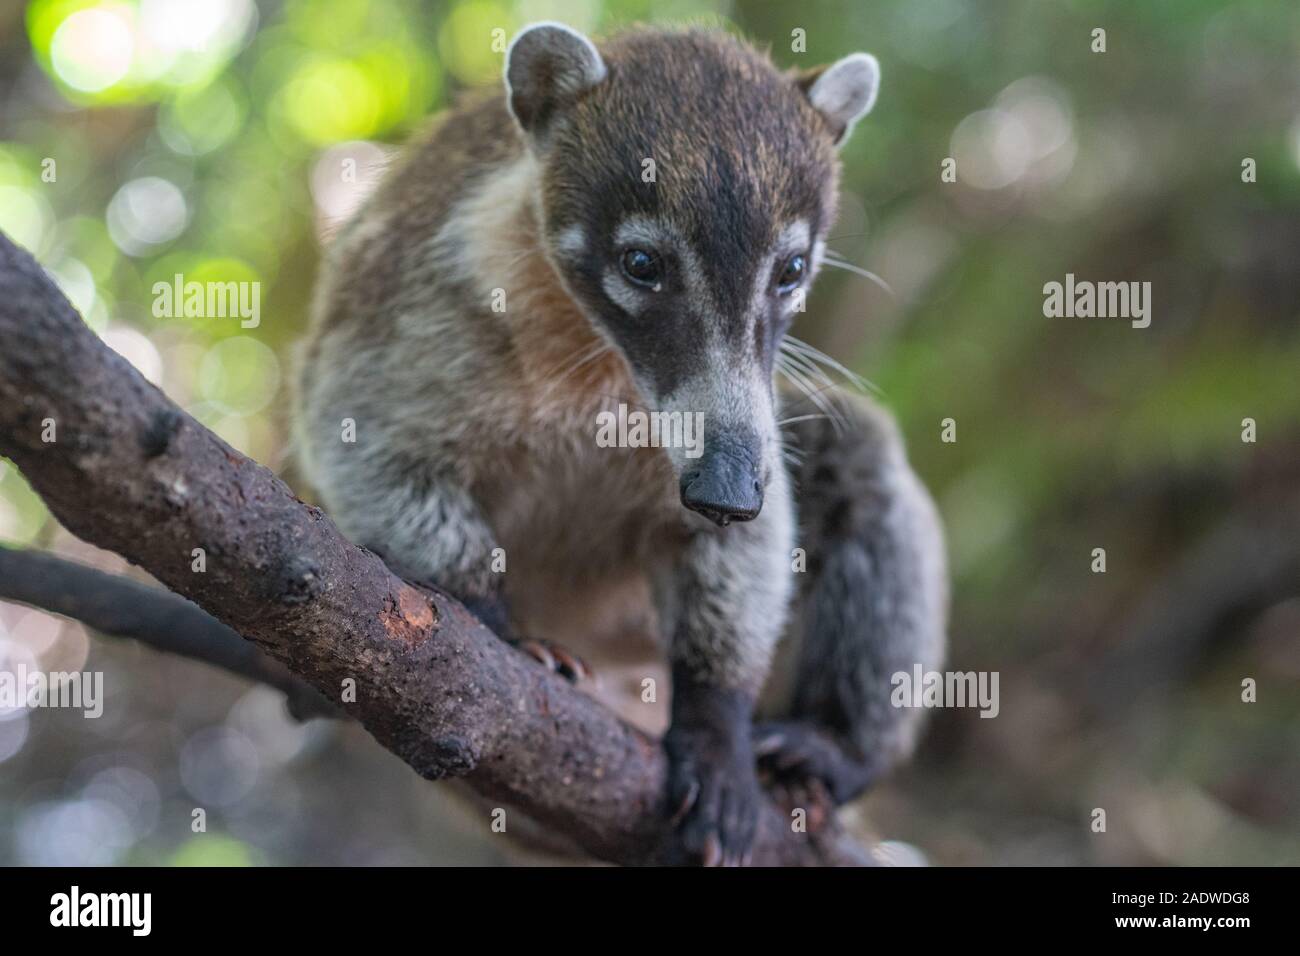 Cute Coati sitting on a tree Stock Photo